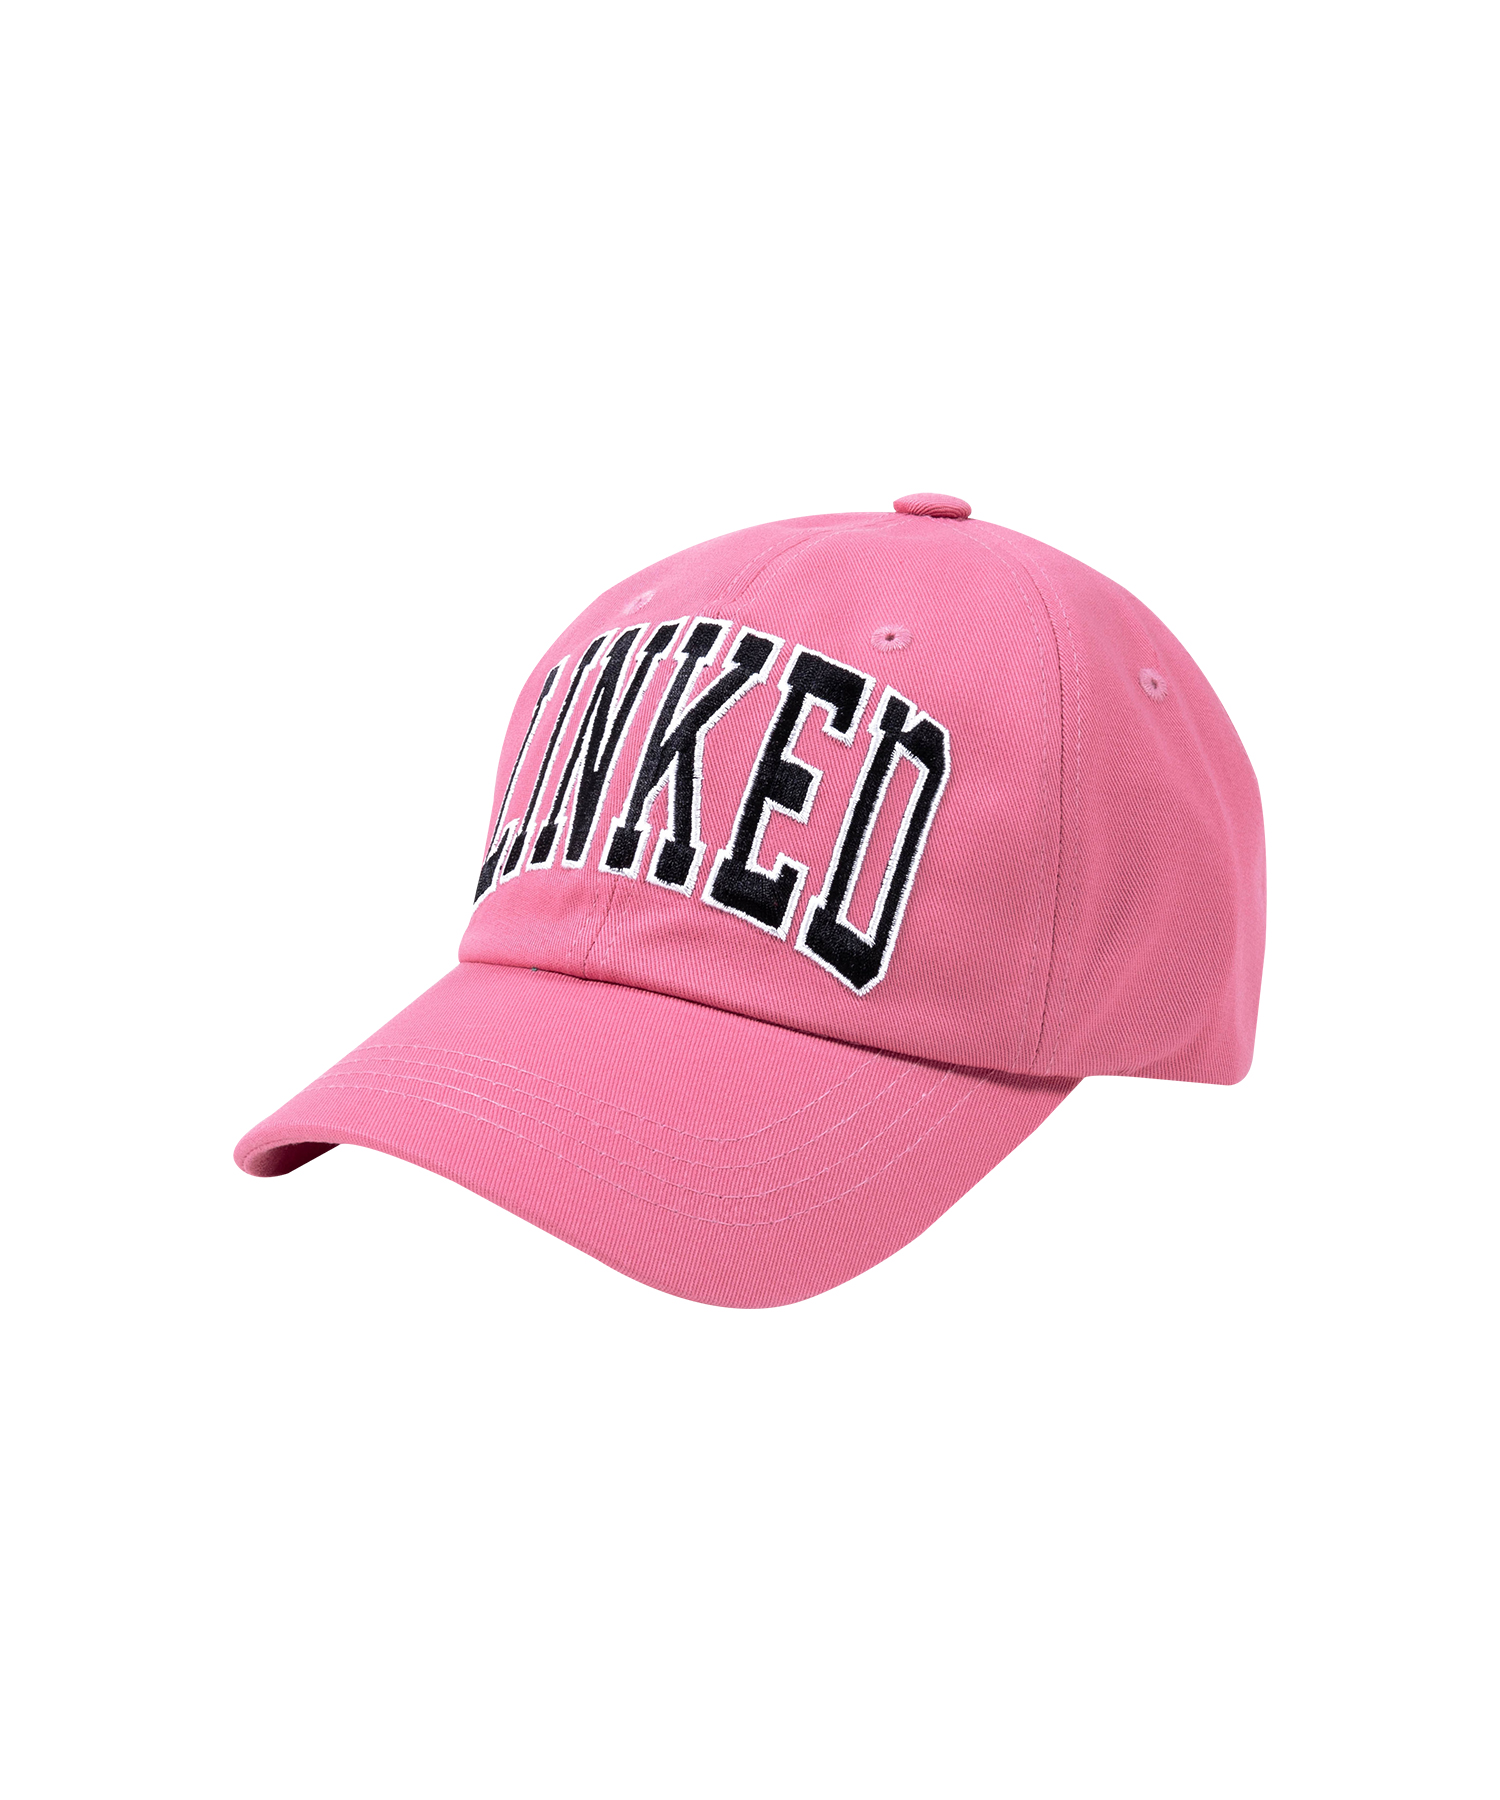 LINKED BALL CAP [PINK]